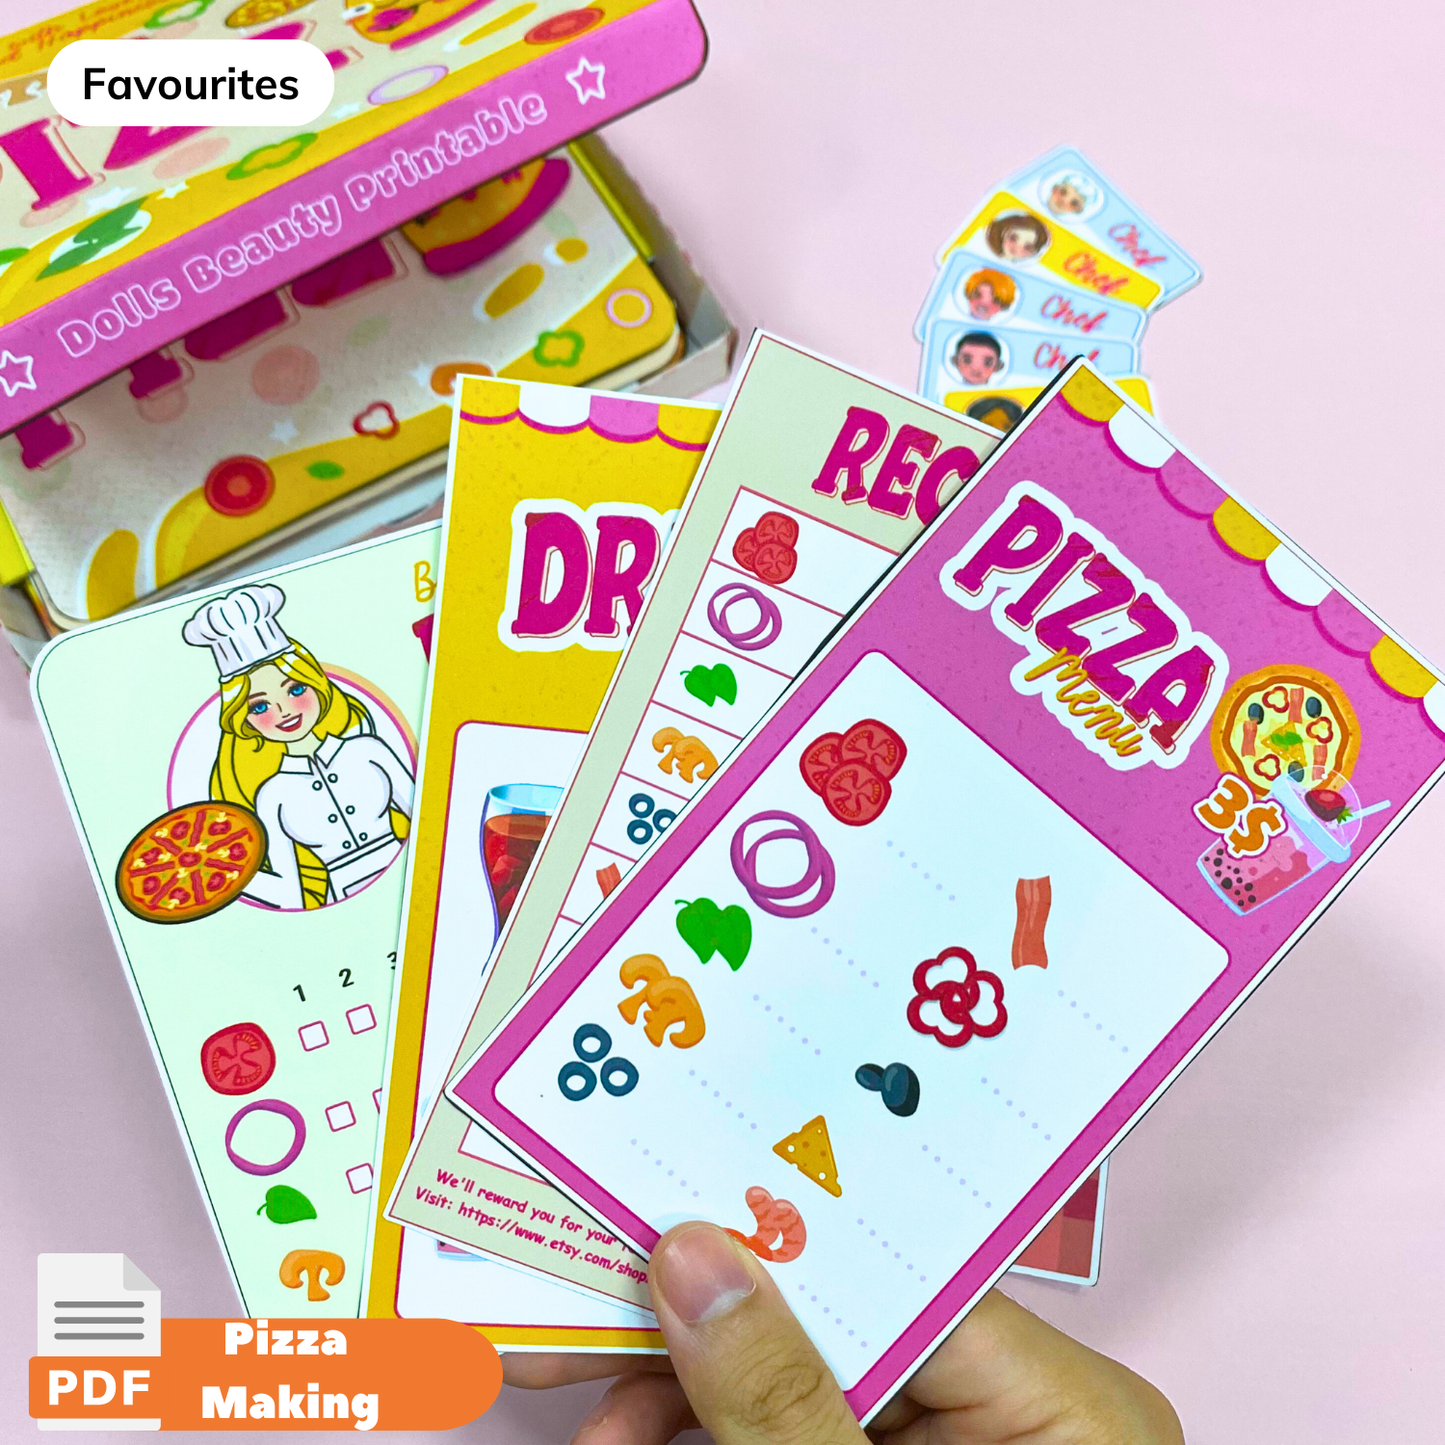 Handmade Pizza Oven Printable - Indoor Activities for Kids - Preschool Games, Toddler Busy Book, Holiday Games, Learning Games, Homeschool Printable 🌈 Woa Doll Crafts